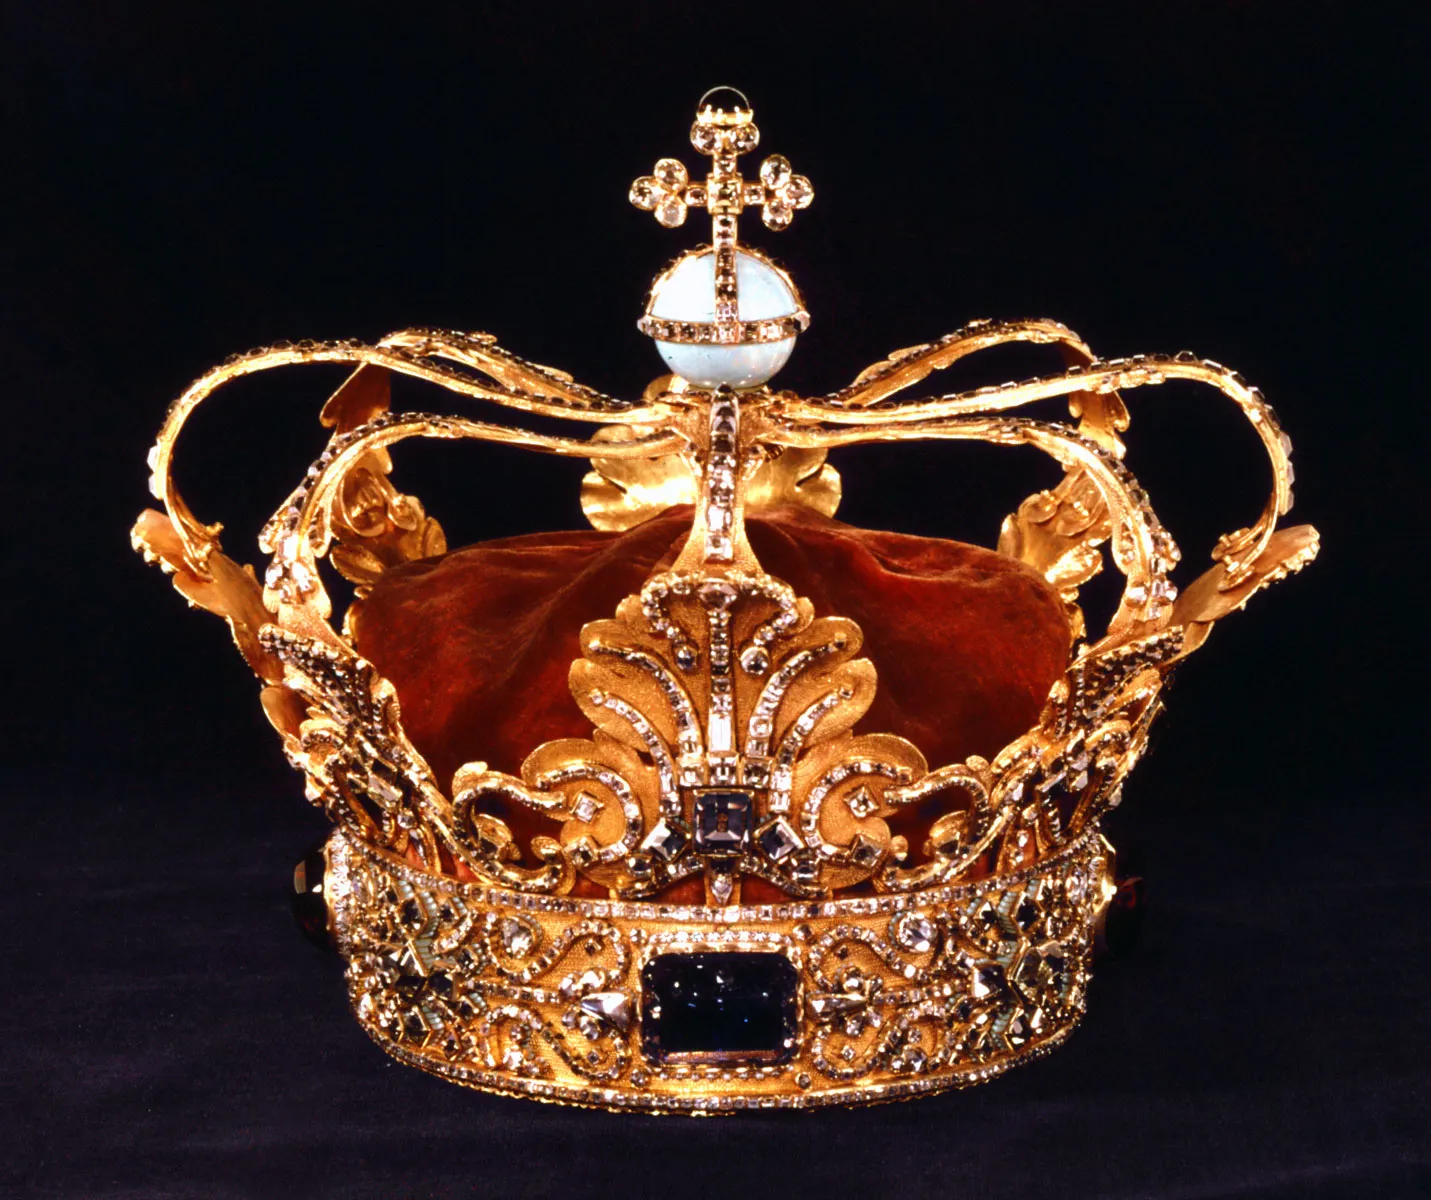 crown-Denmark-helmet-form-enamel-gold-stones-1670.png